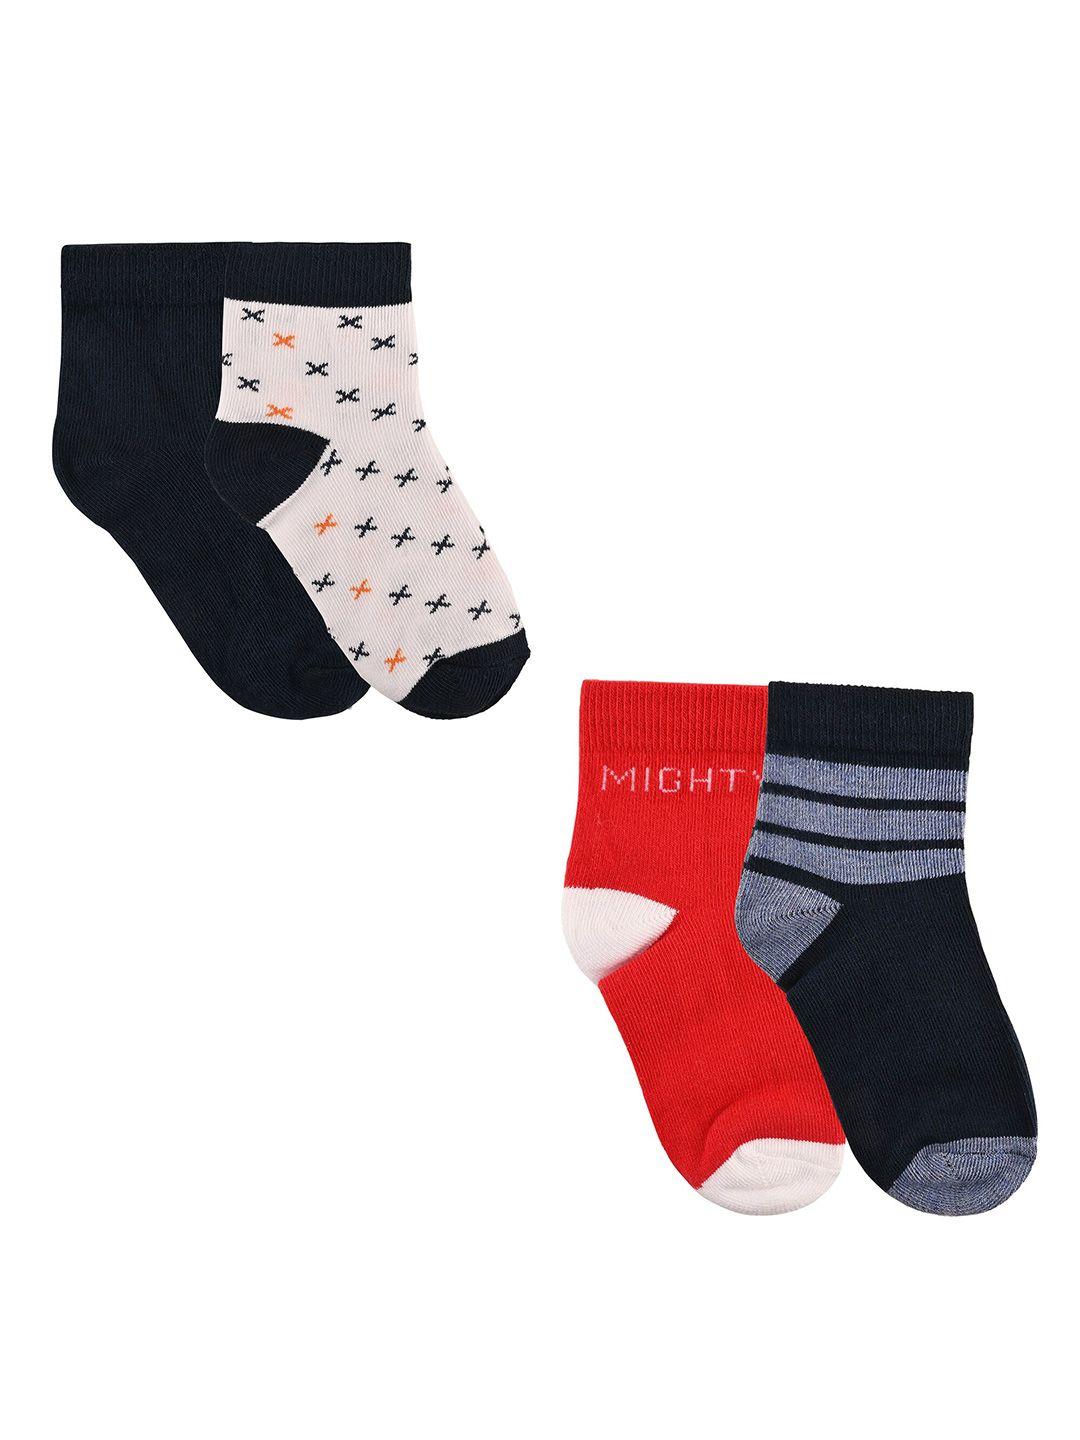 nuluv-boys-set-of-4-ankle-length-cotton-socks